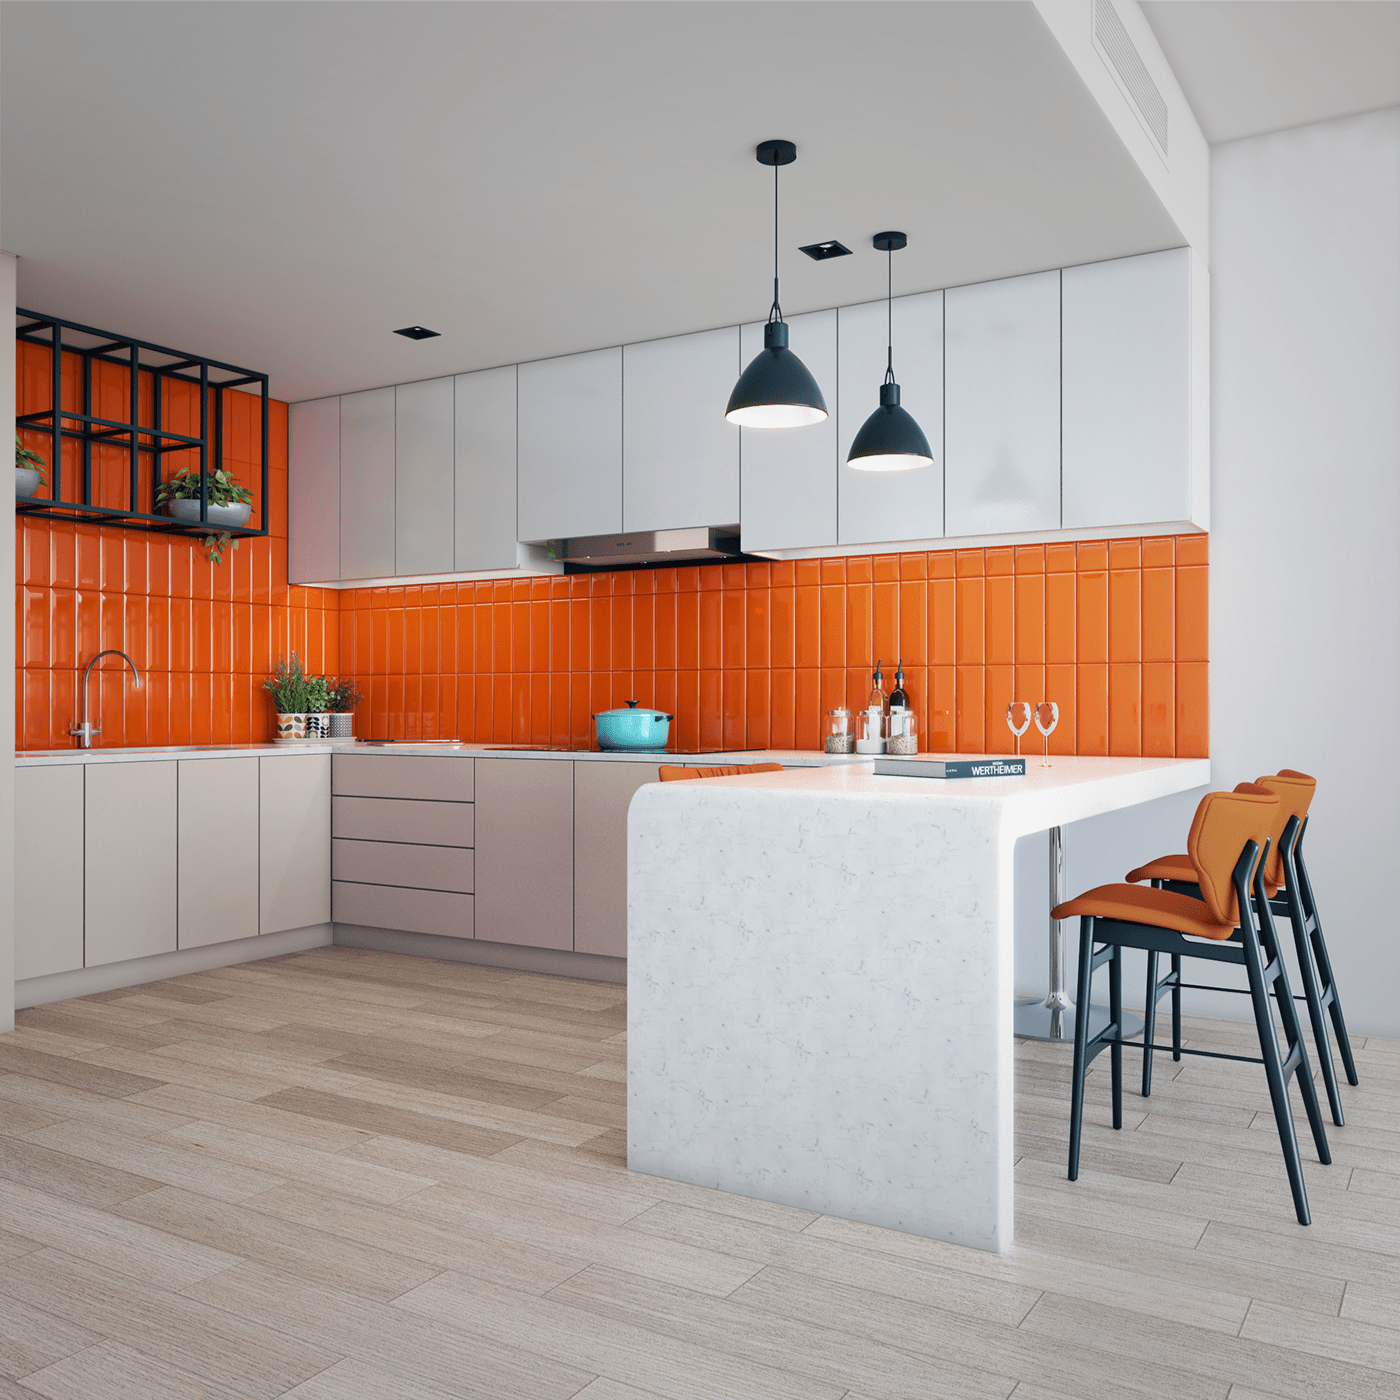 3dmodeling architecture archiviz interior design  kitchen modern Render SketchUP visualization vray